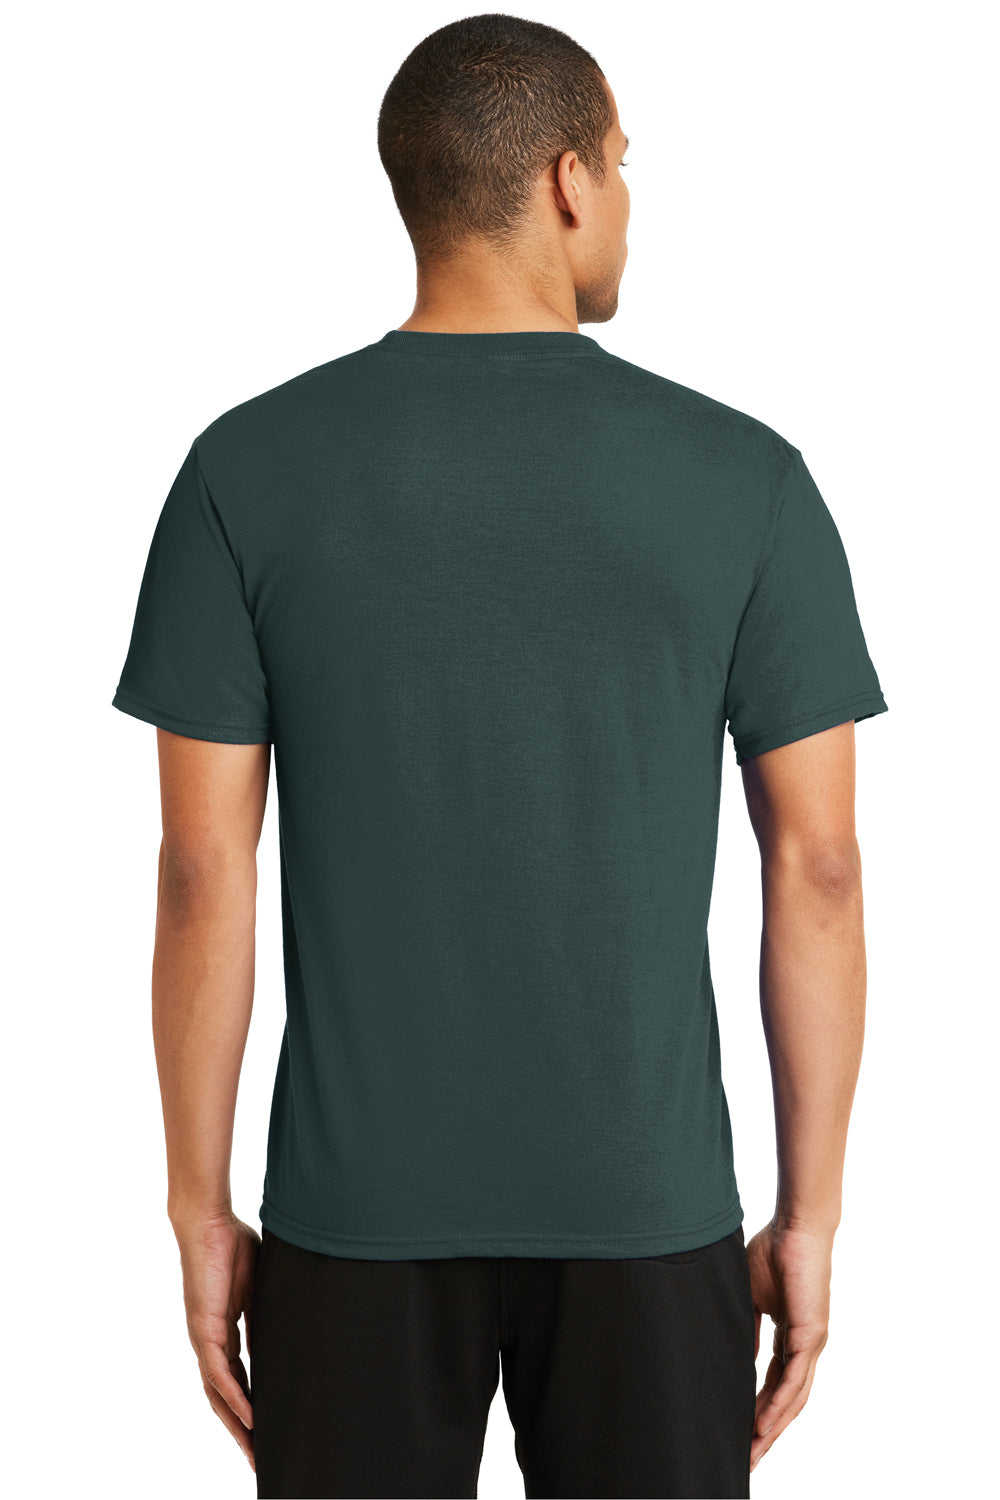 Port & Company PC381 Mens Dry Zone Performance Moisture Wicking Short Sleeve Crewneck T-Shirt Dark Green Back